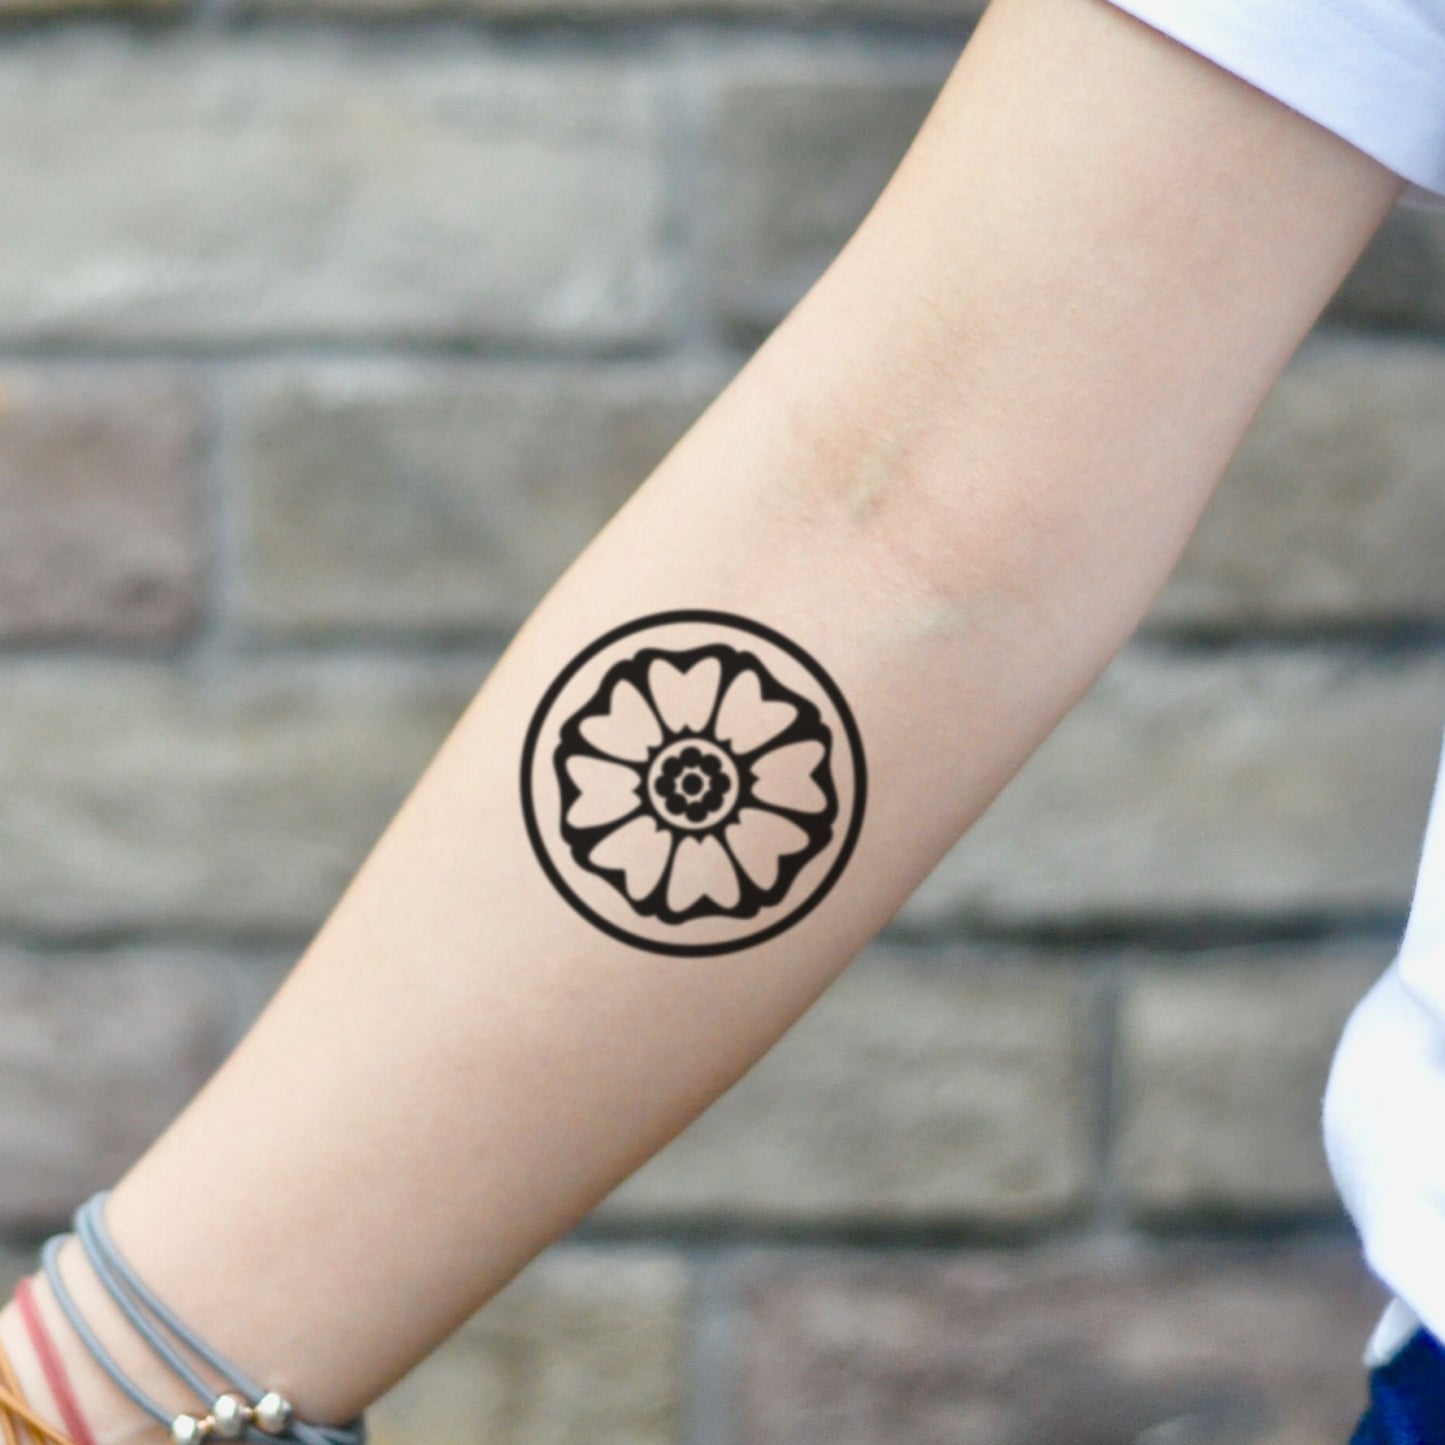 fake small uncle iroh white lotus wisdom geometric temporary tattoo sticker design idea on inner arm